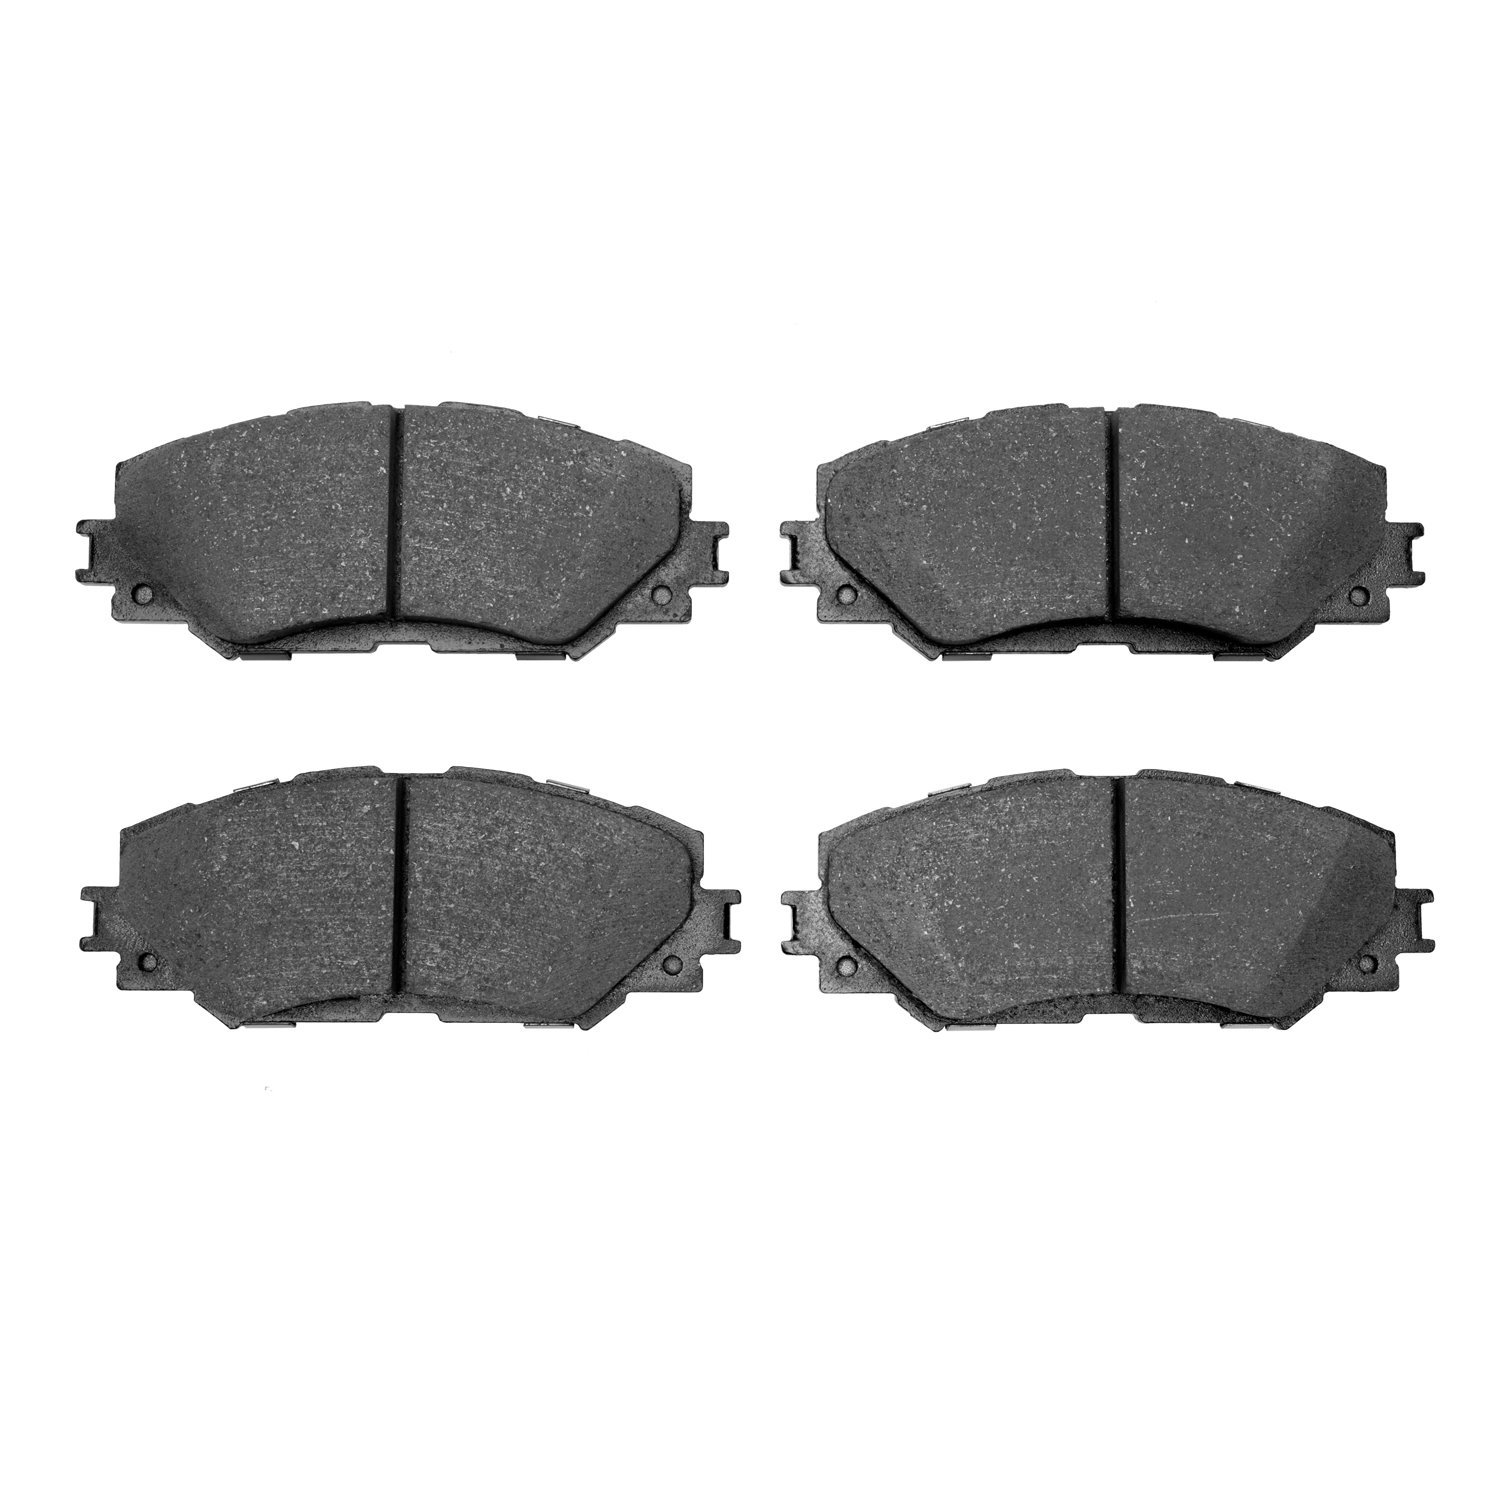 Semi-Metallic Brake Pads, 2006-2019 Fits Multiple Makes/Models, Position: Front